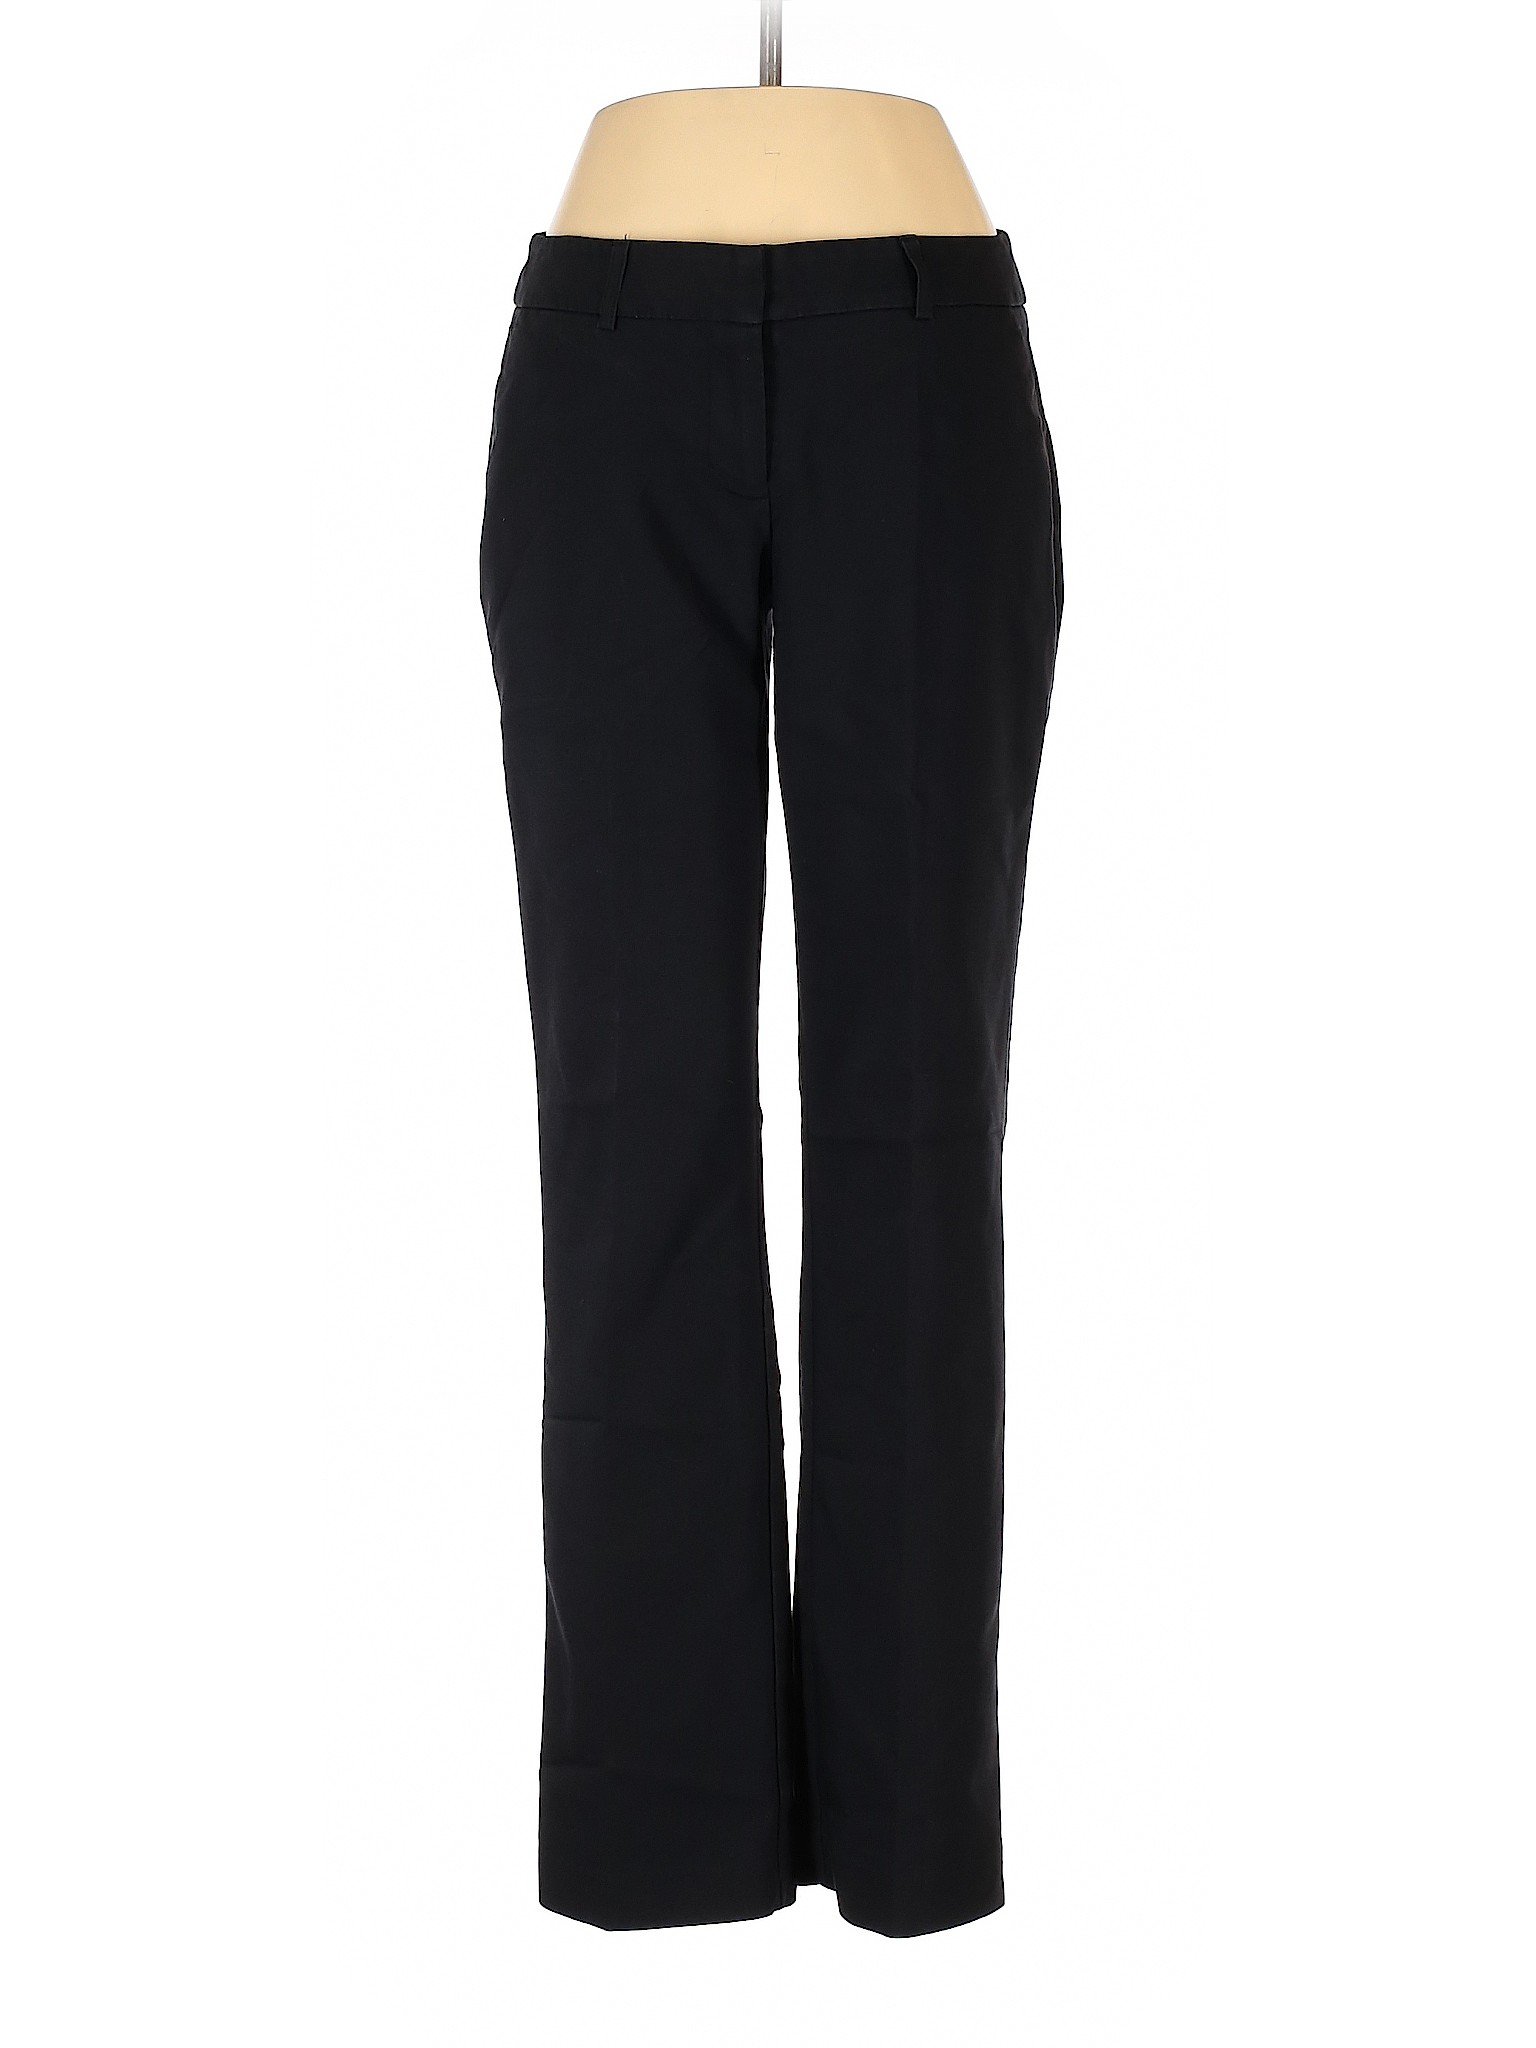 Kohl's Women Black Dress Pants 4 | eBay